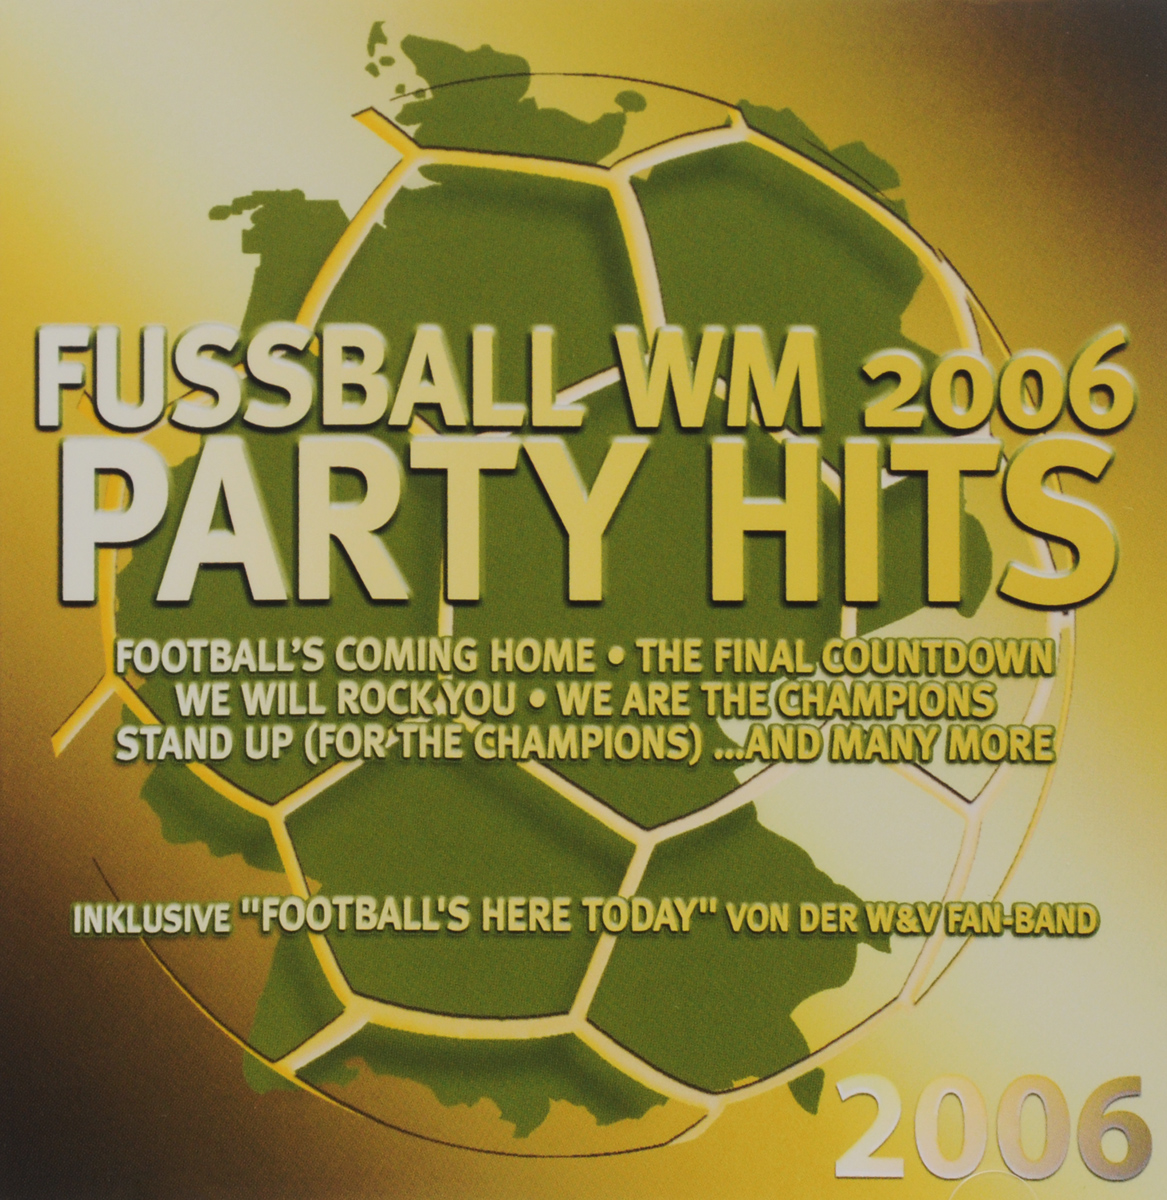 Fussball WM 2006 Party Hits